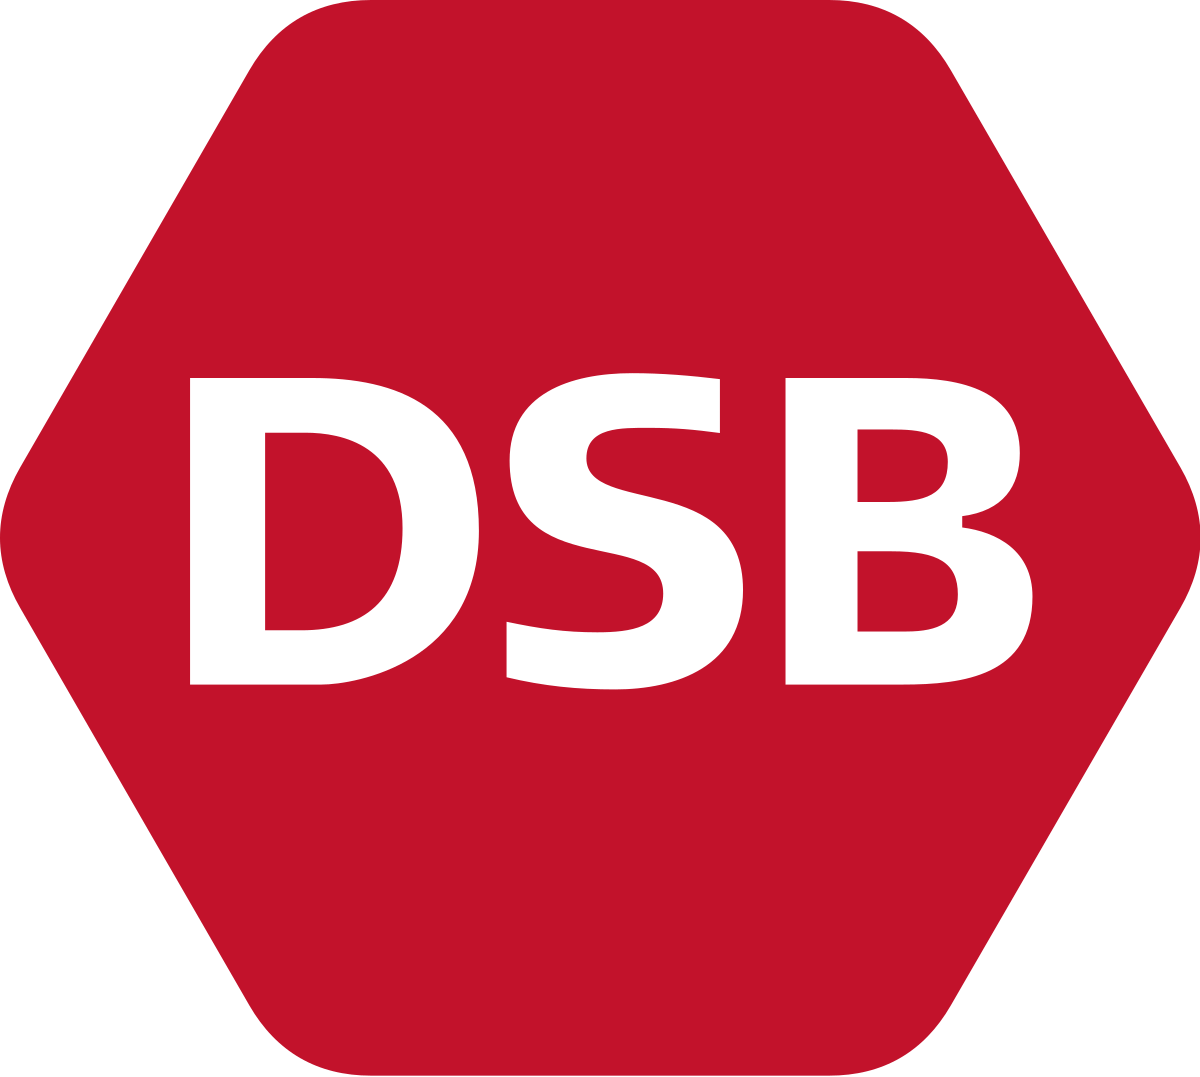 Railway Company Logo - DSB (railway company)